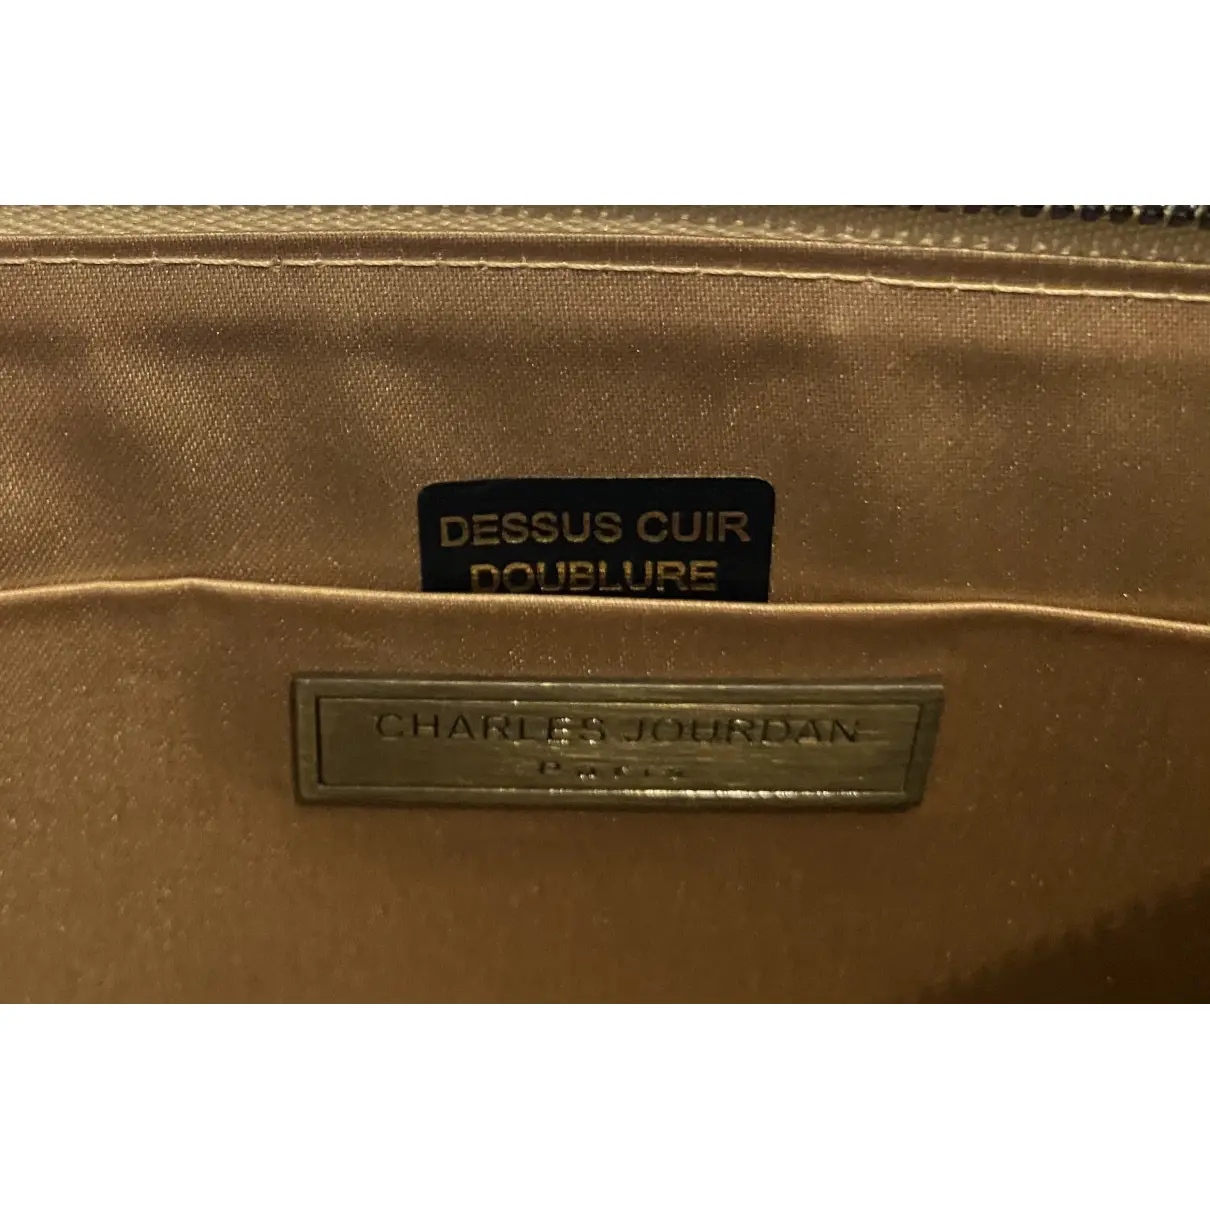 Leather clutch bag Charles Jourdan